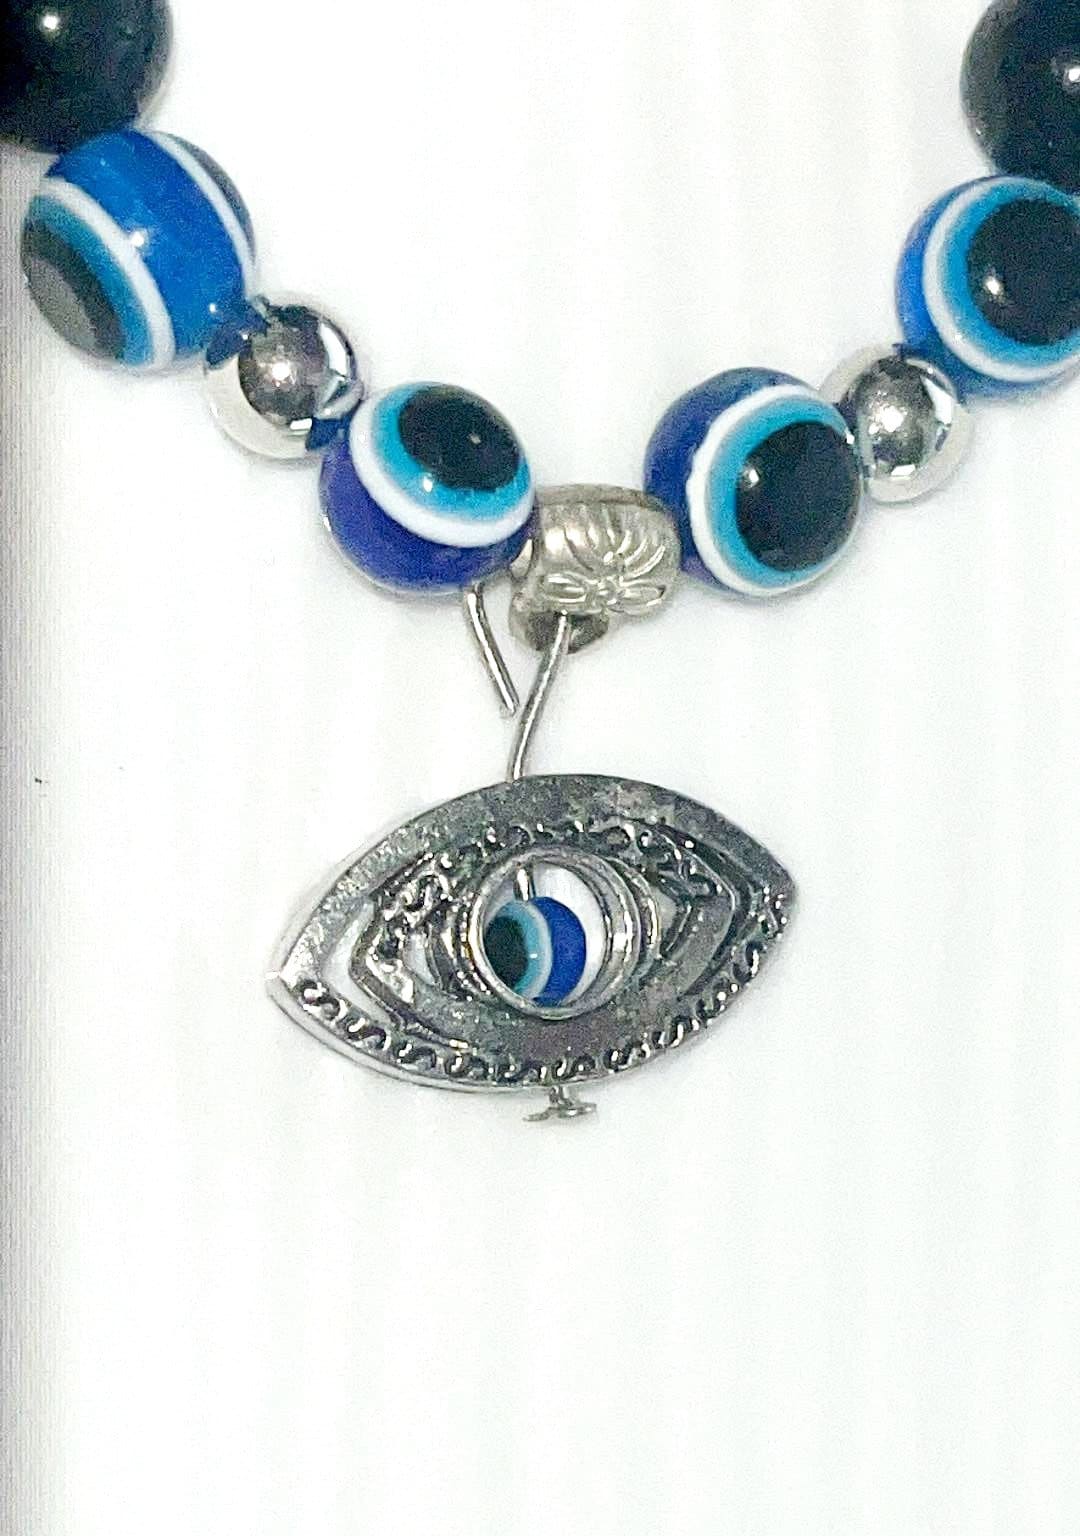 Obsidian Blue evil eye bracelet with Obsidian crystal beads and blue evil eye charm, 8 mm beads